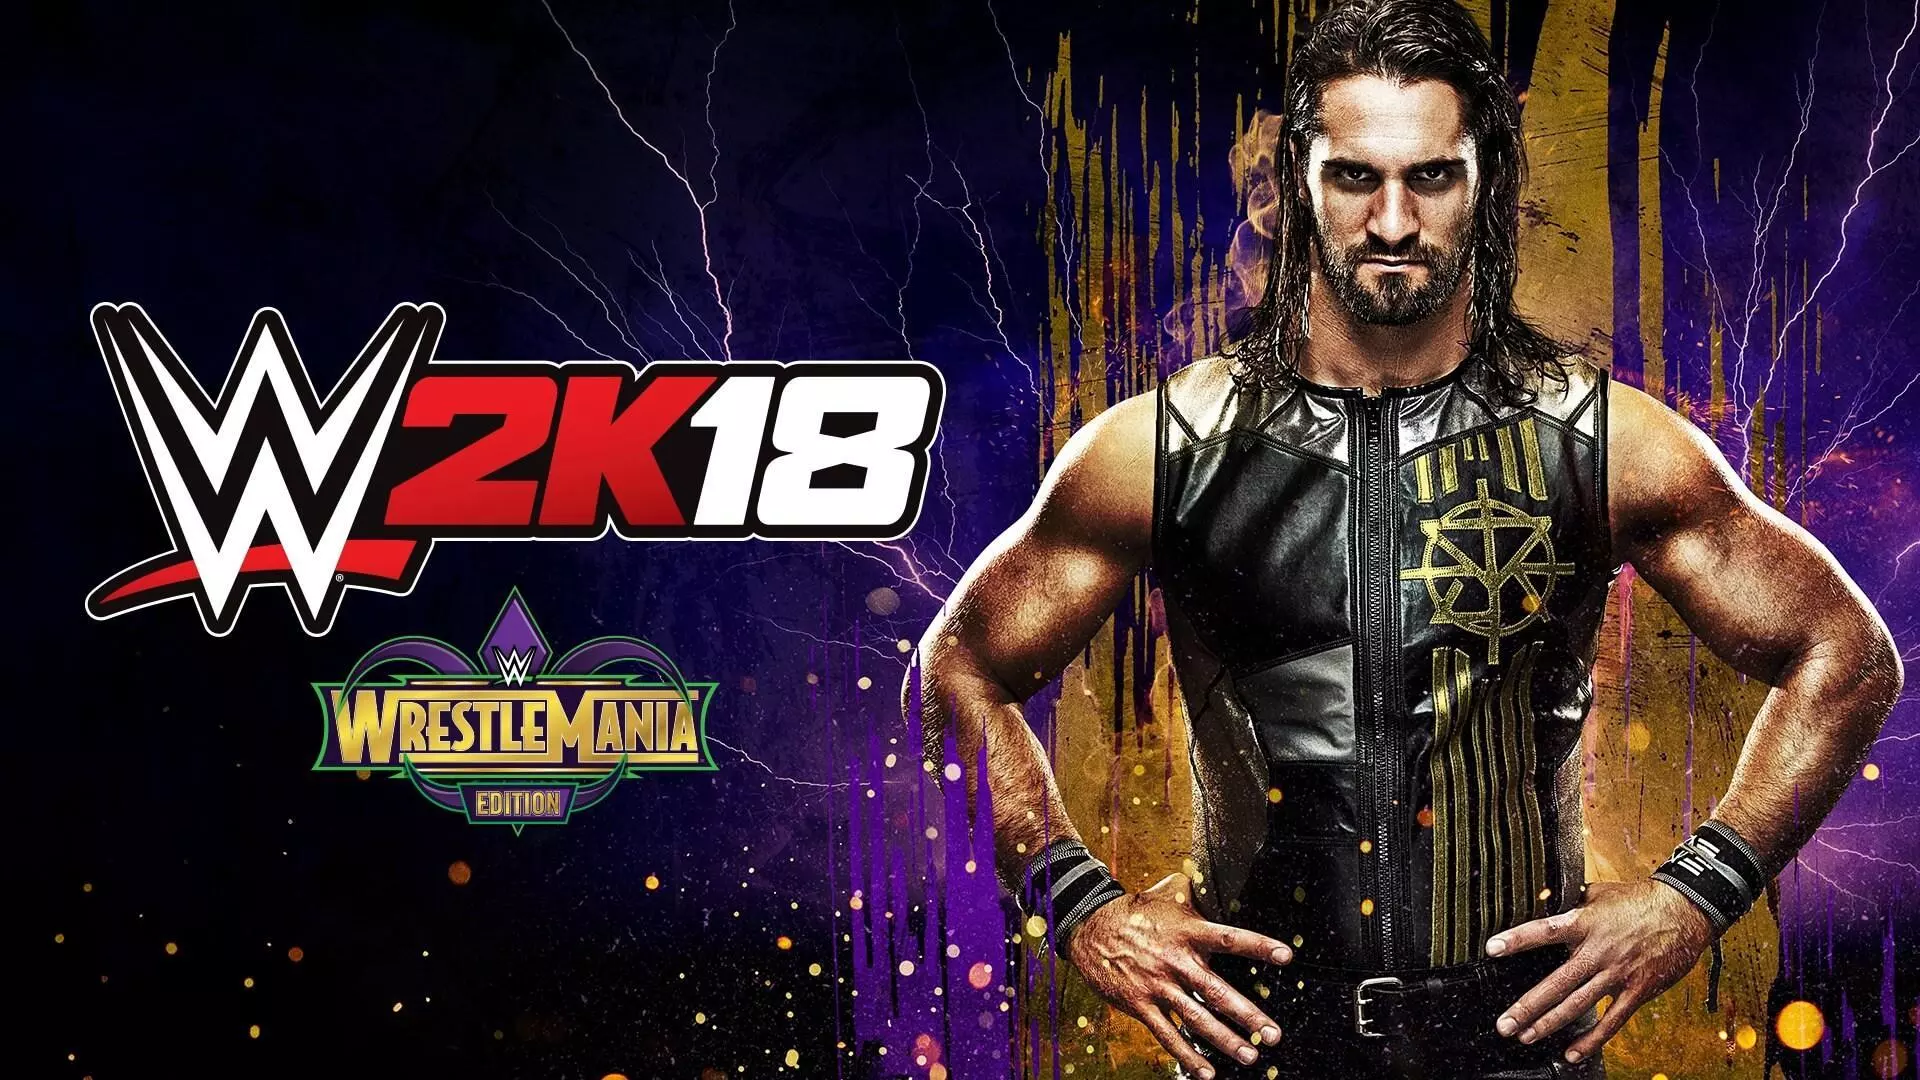 WWE 2K18: WrestleMania Edition Releasing Internationally on March 23